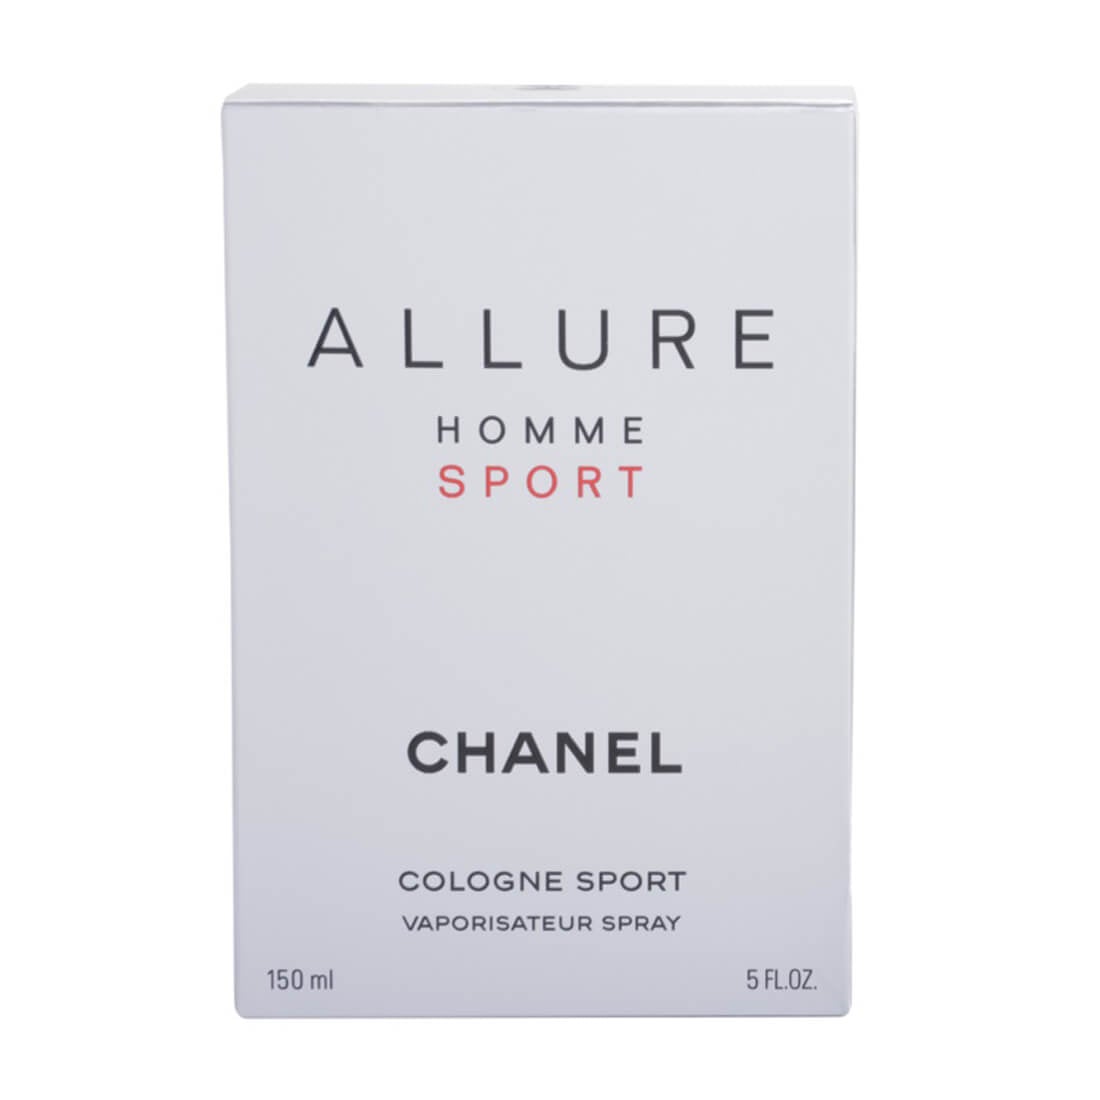 Chanel allure homme cologne. Chanel Allure homme Sport Cologne 20 ml. Allure homme Sport Cologne 150 ml. Chanel Allure homme Sport 150ml. Chanel Allure Sport men 50ml Cologne.